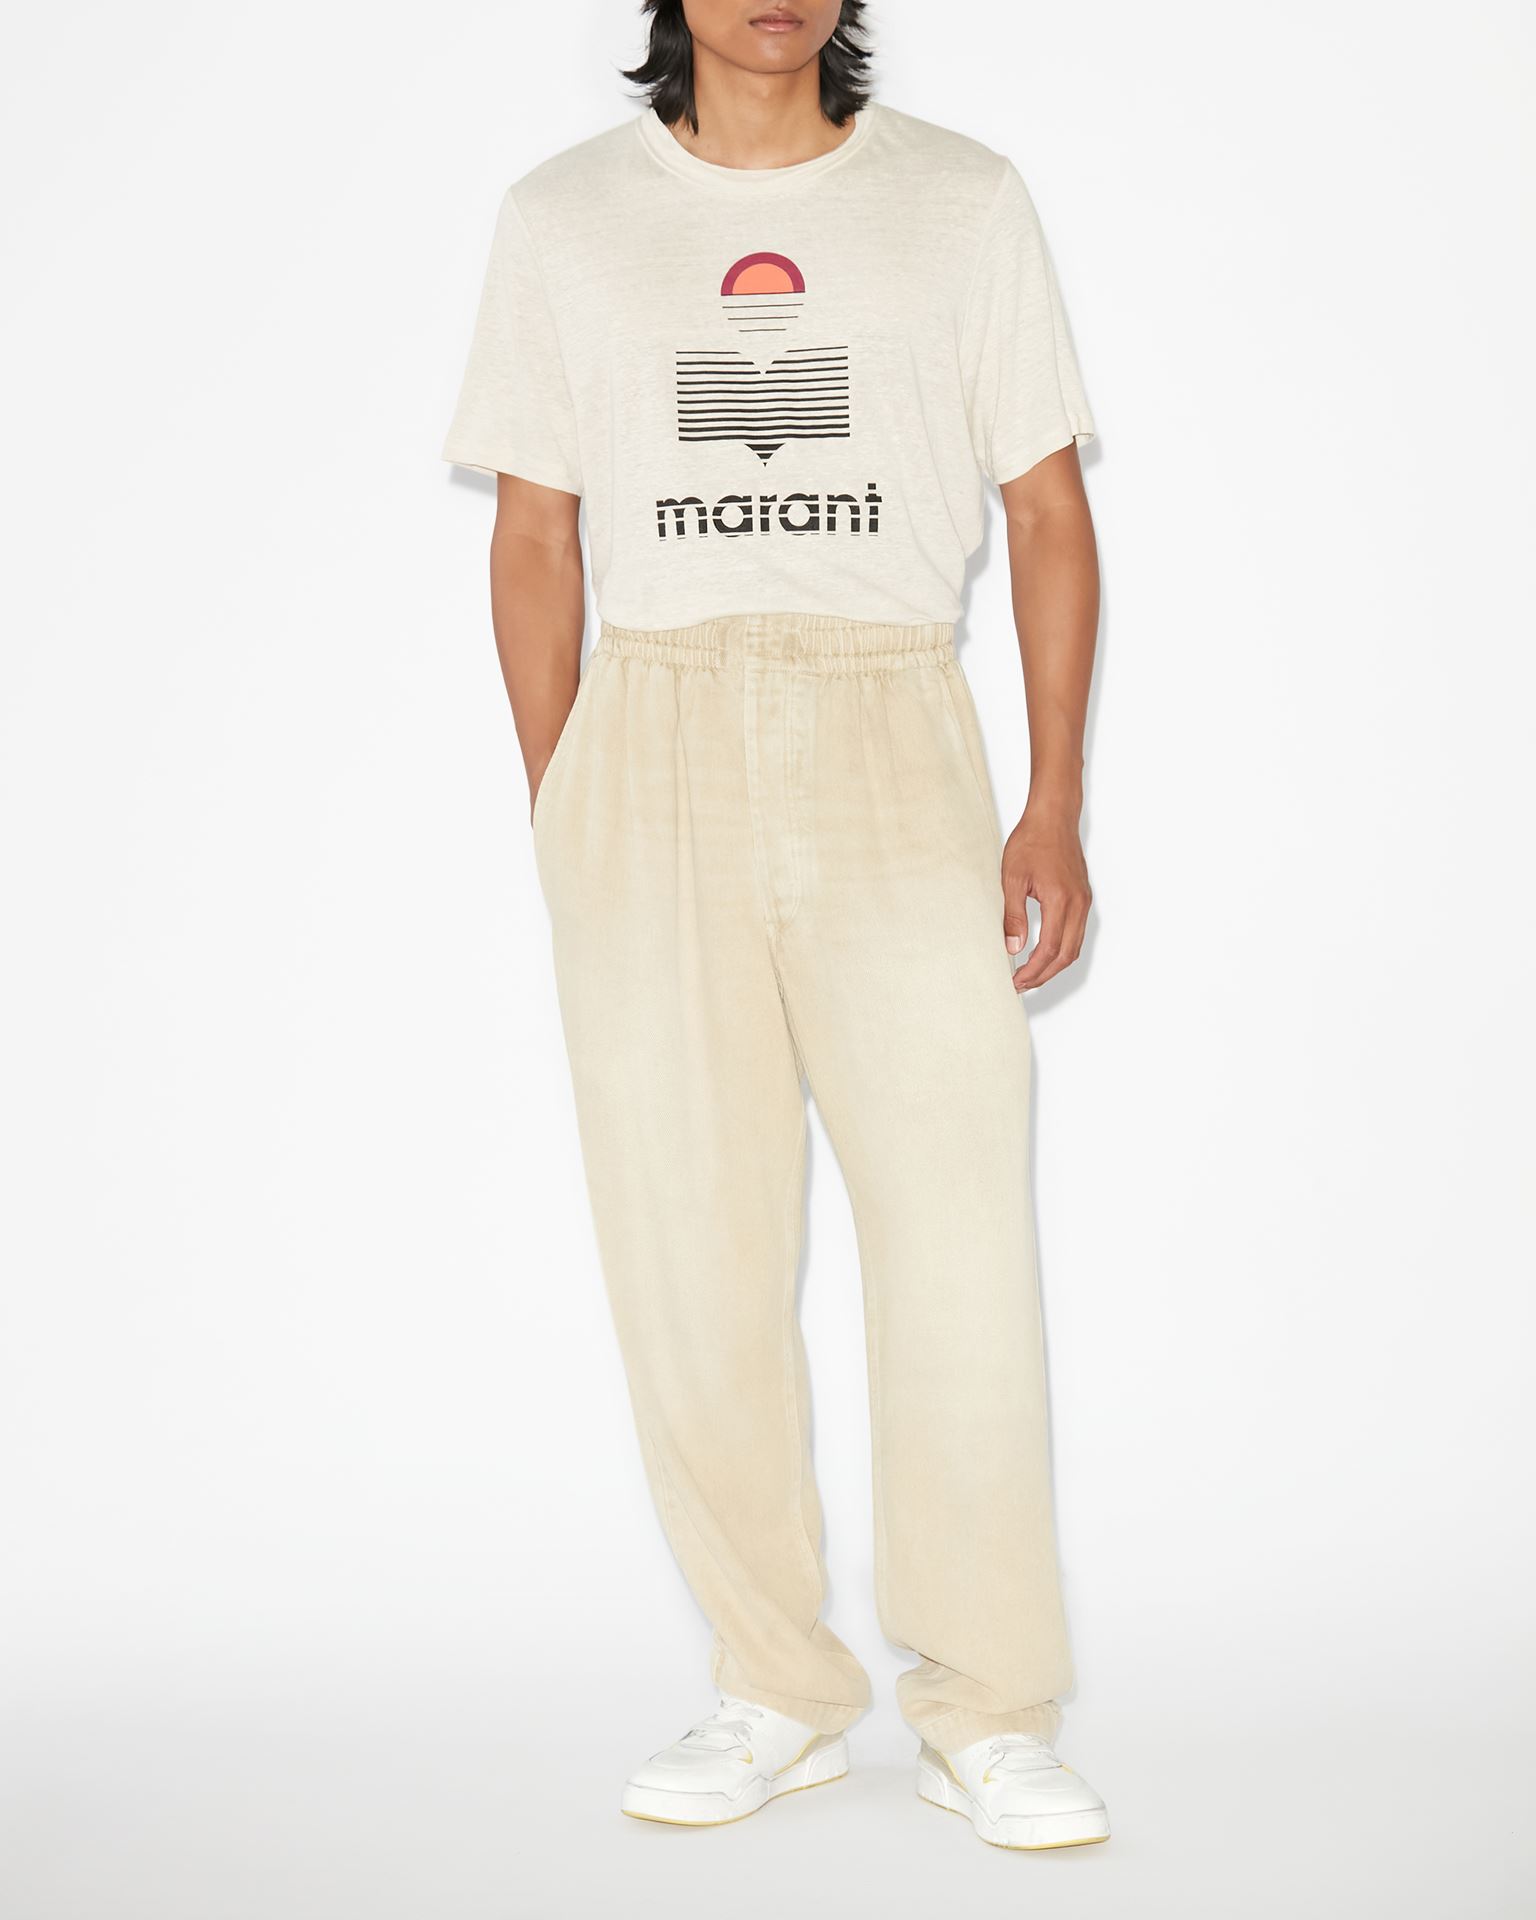 Isabel Marant, Tee-shirt À Logo Karman - Homme - Blanc